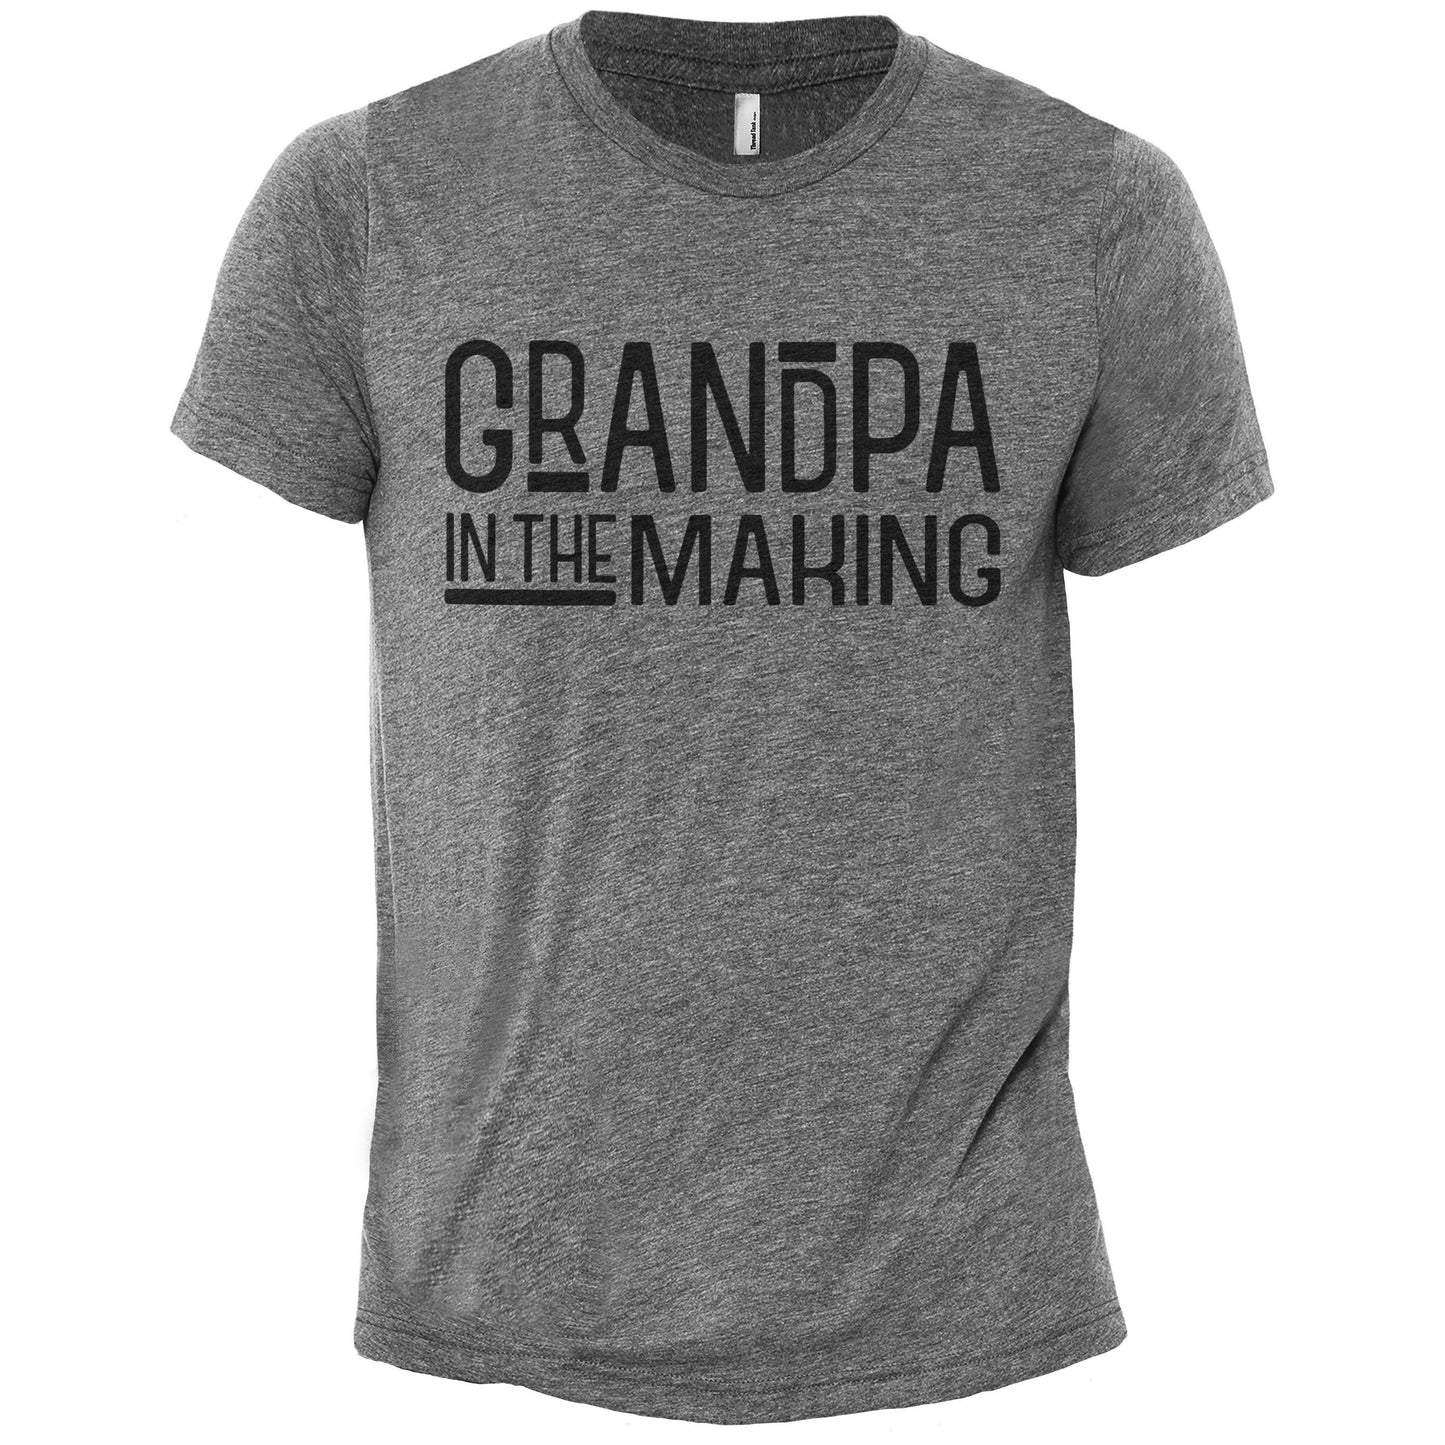 Grandpa In The Making Heather Grey Printed Graphic Men's Crew T-Shirt Tee